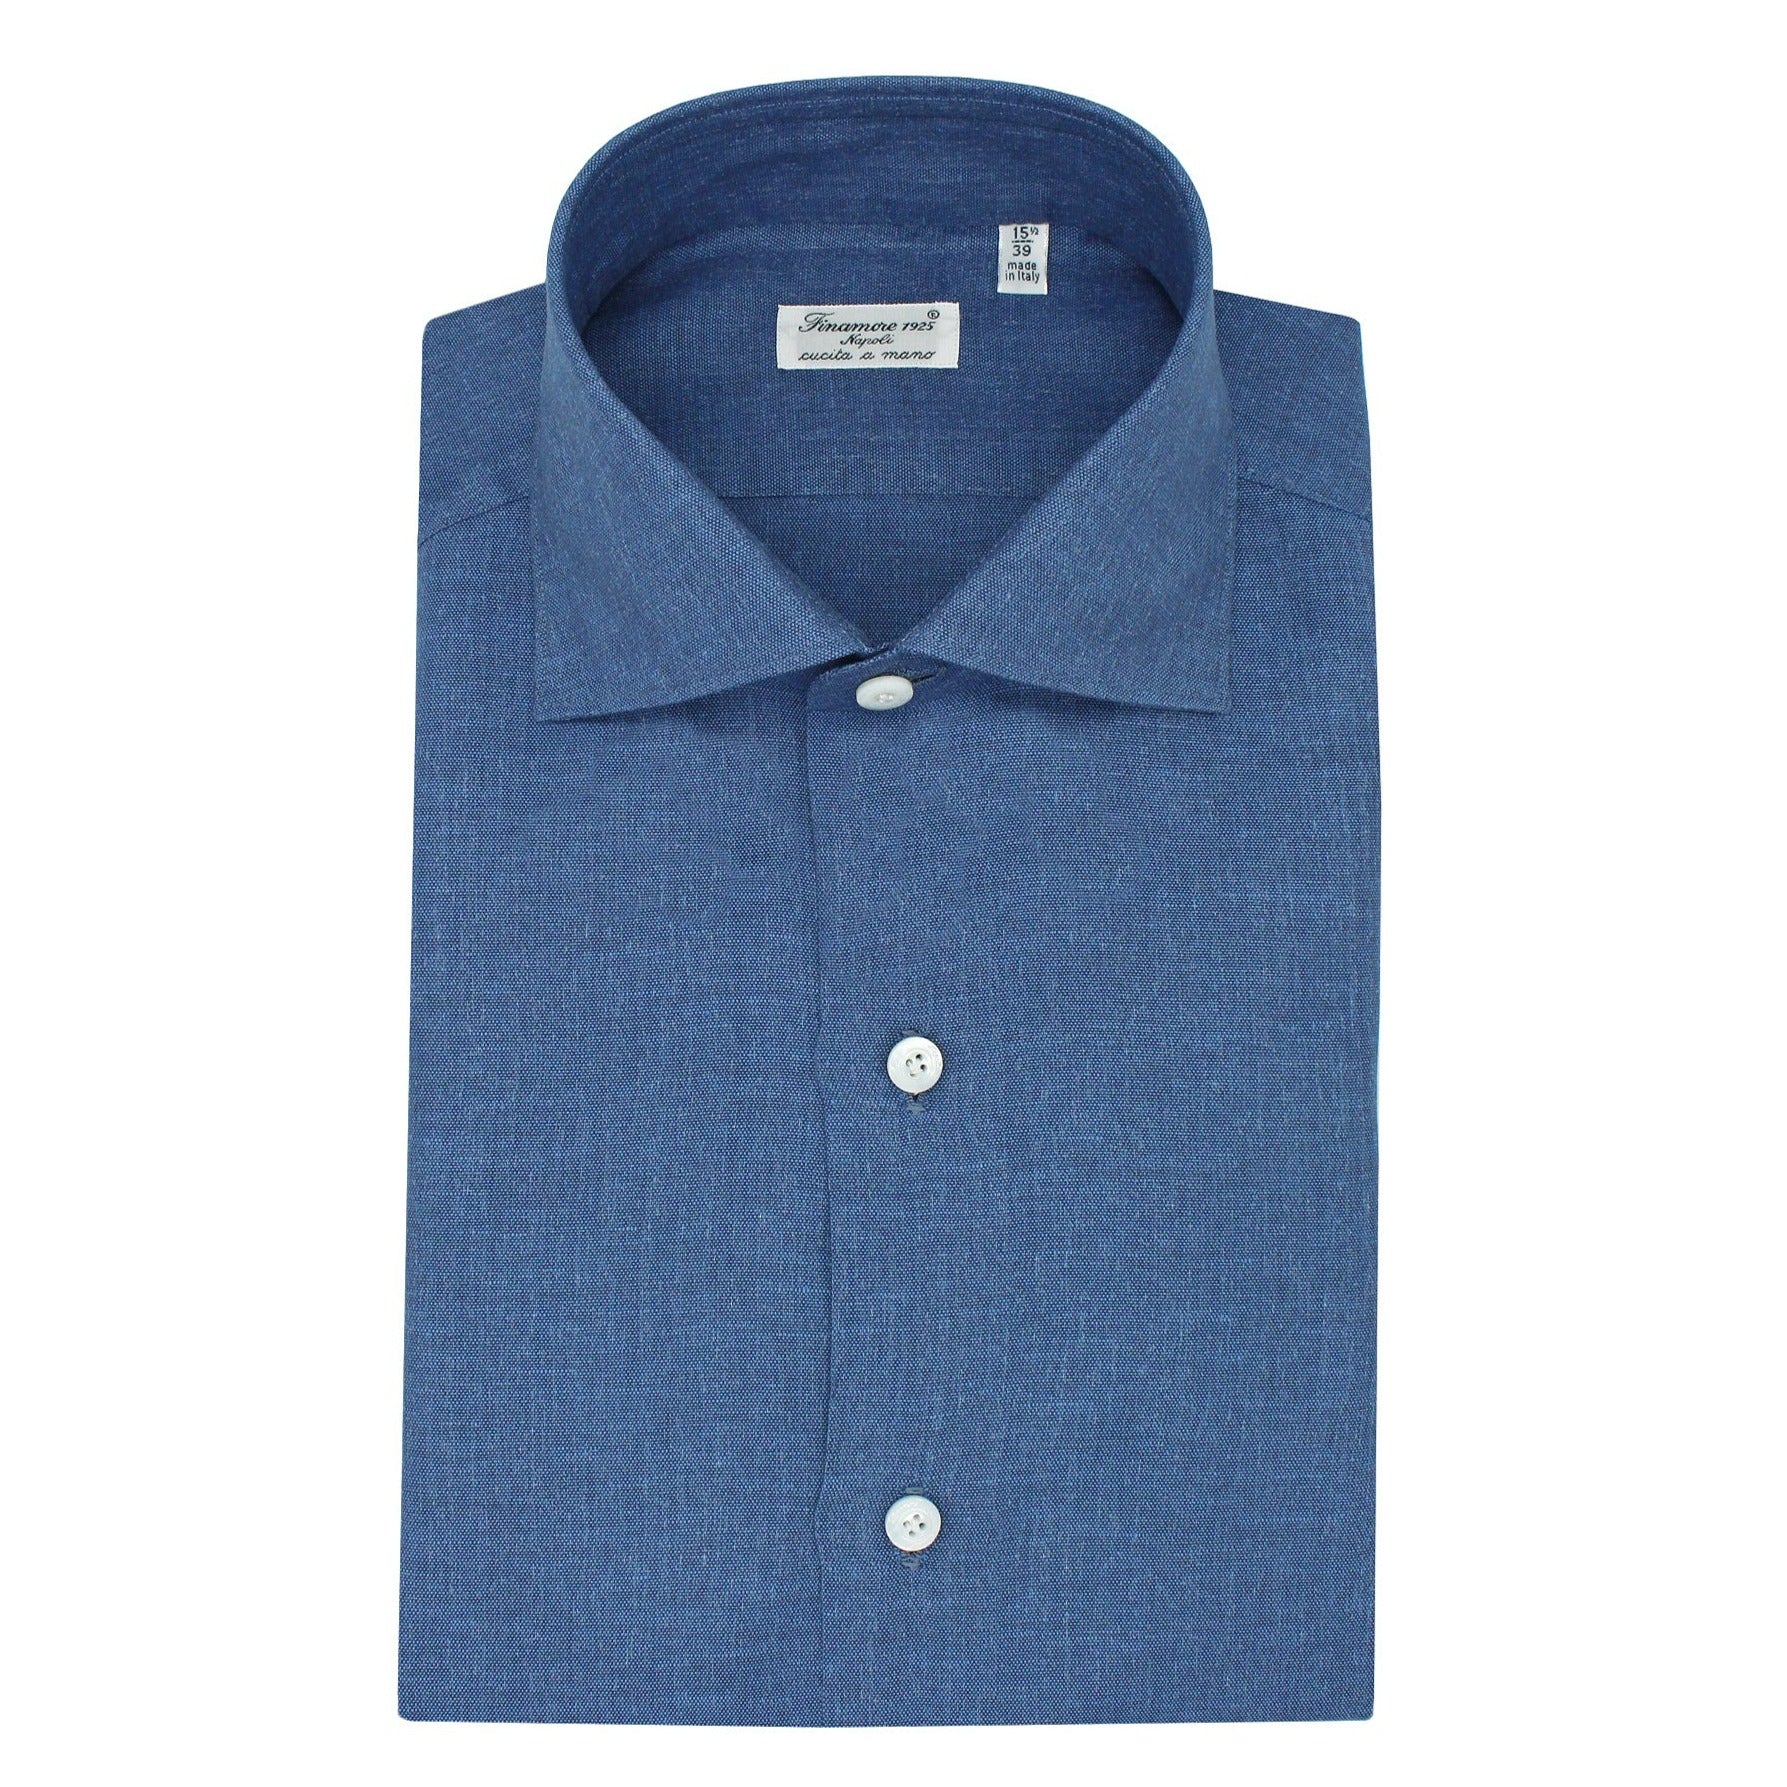 Slim fit shirt Milano blue Carlo Riva fabric – Finamore 1925